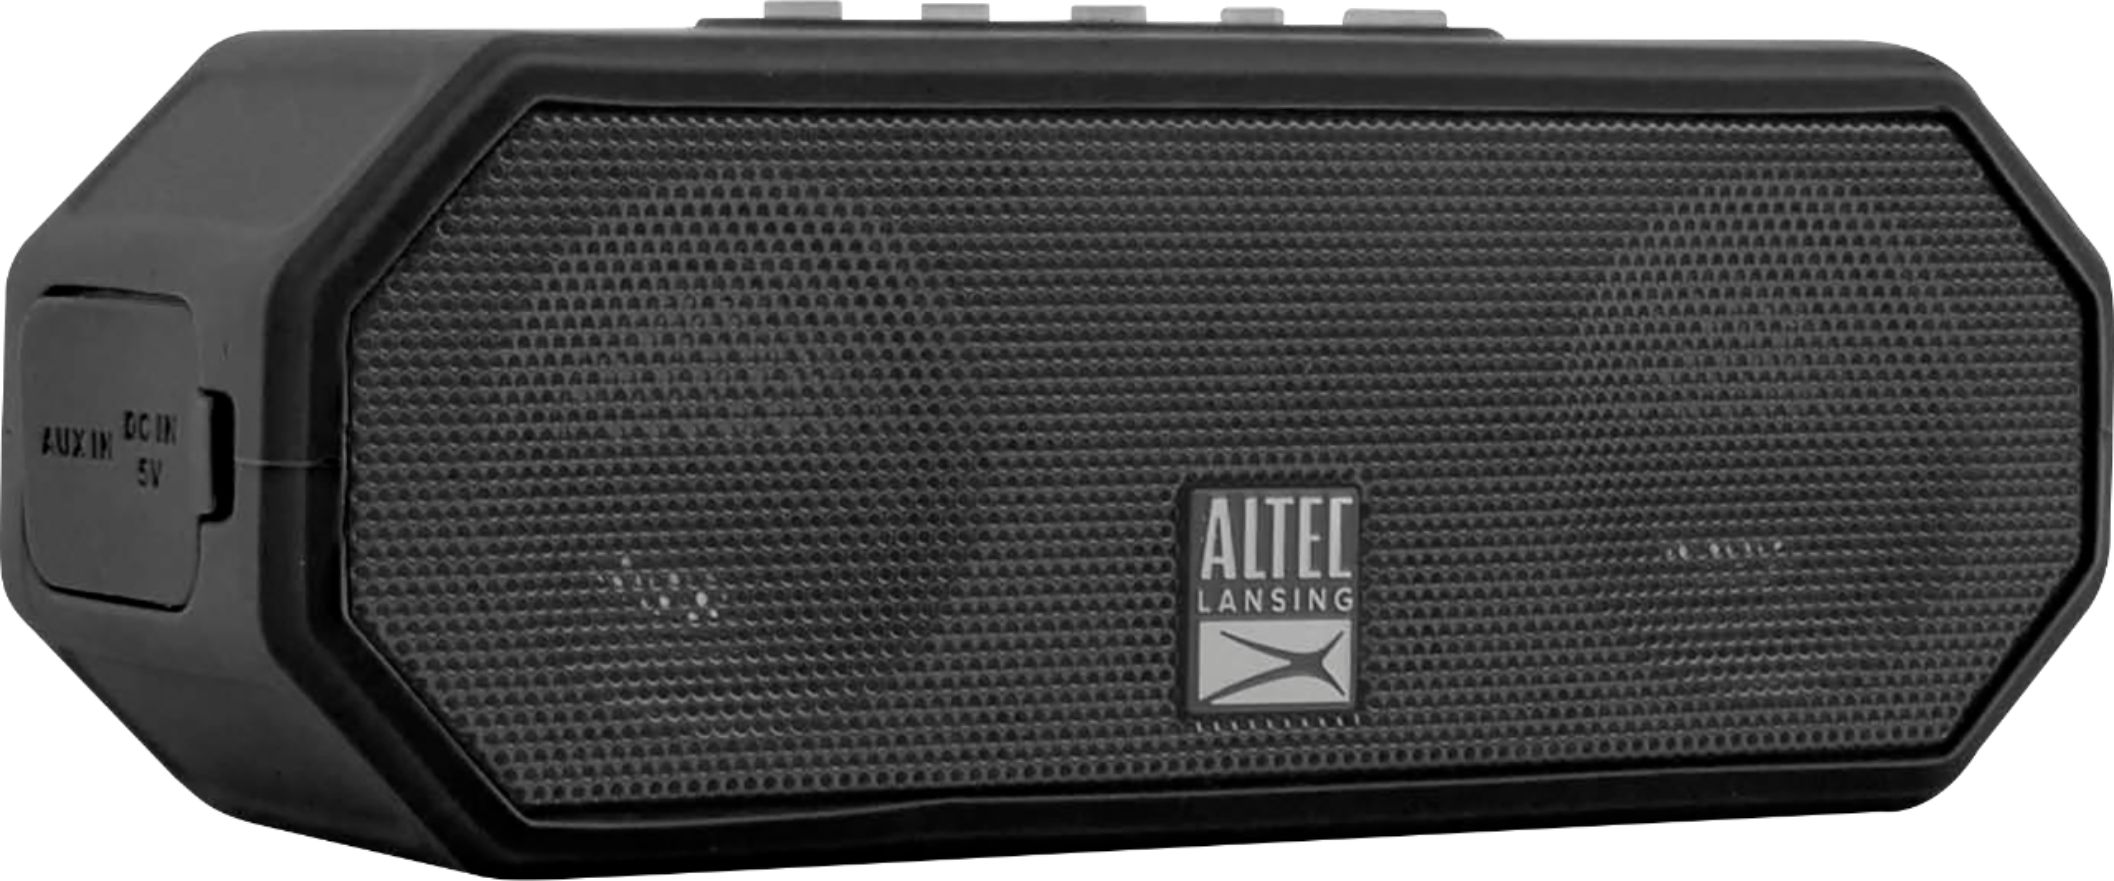 Angle View: Altec Lansing - Jacket H20 4 Portable Bluetooth Speaker - Black